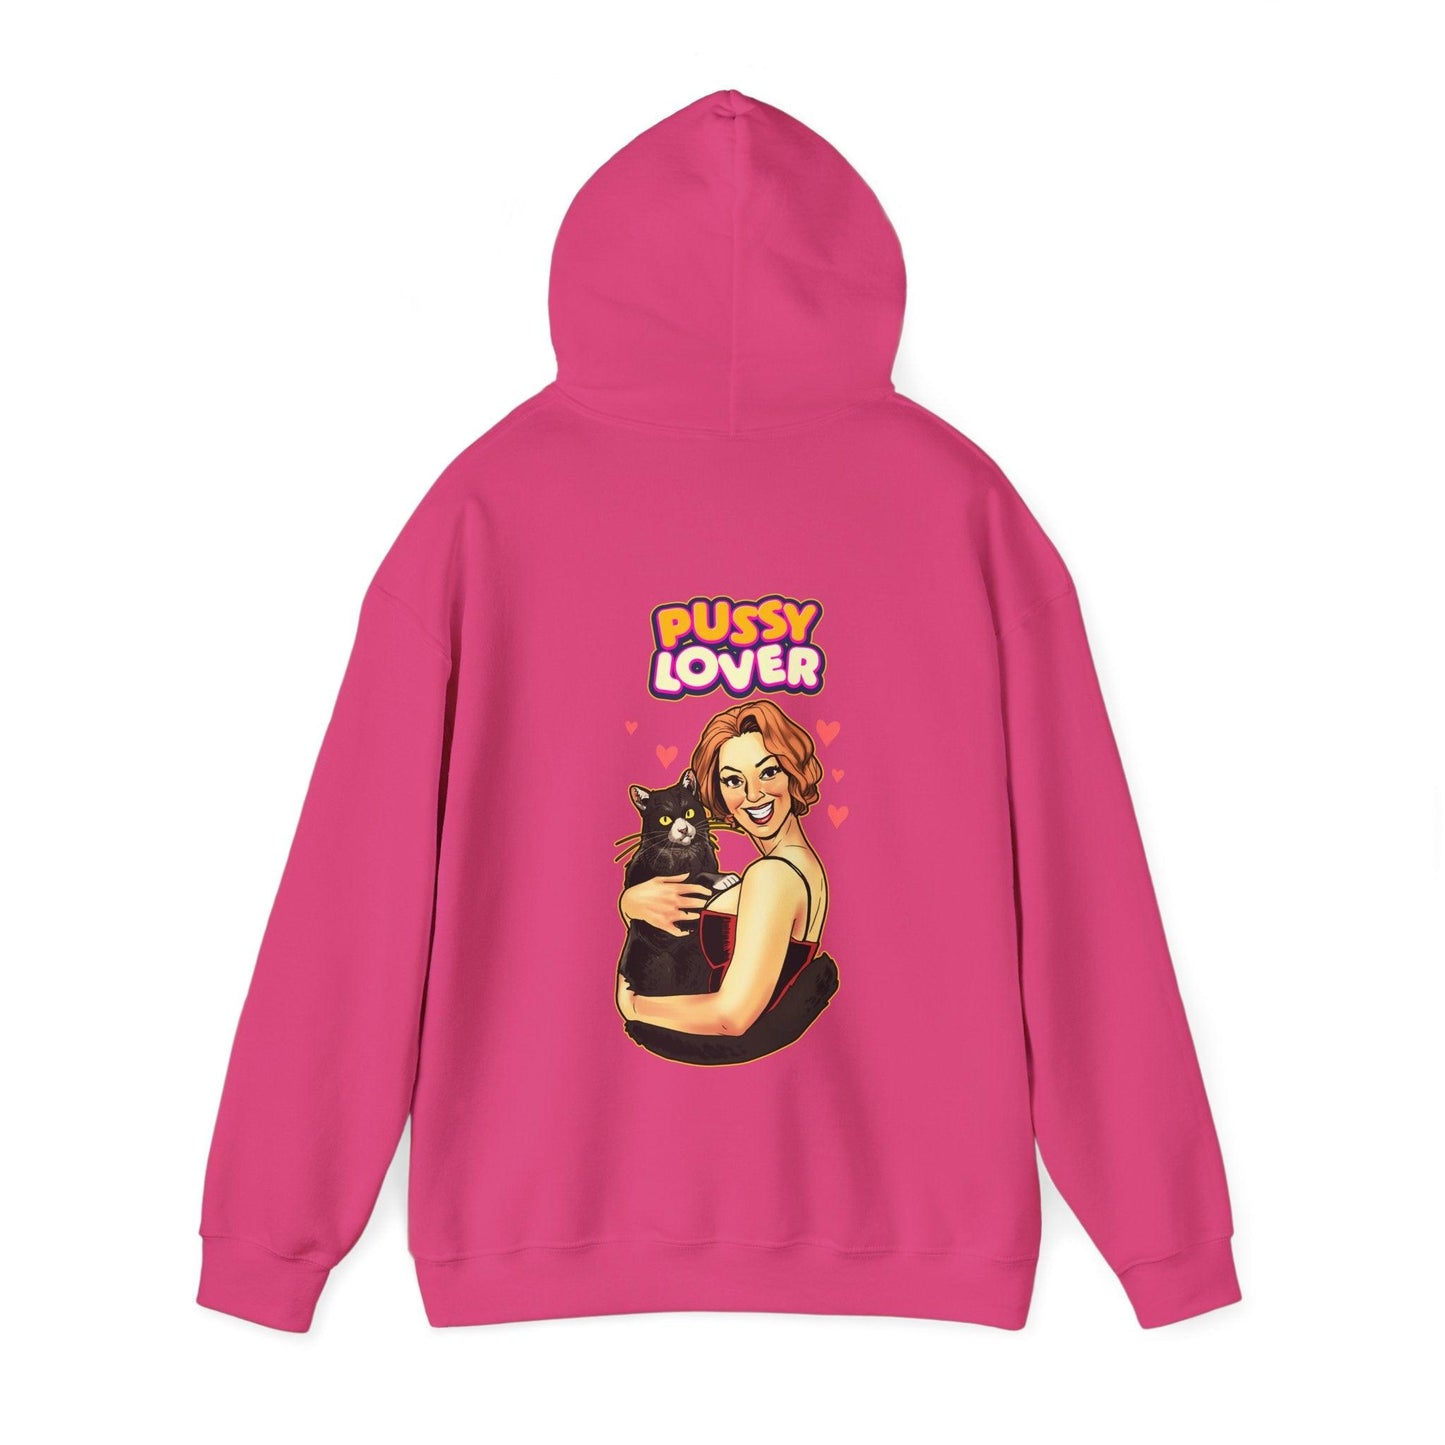 Pussy Lover - Unisex Heavy Blend Hooded Sweatshirt - Shaneinvasion